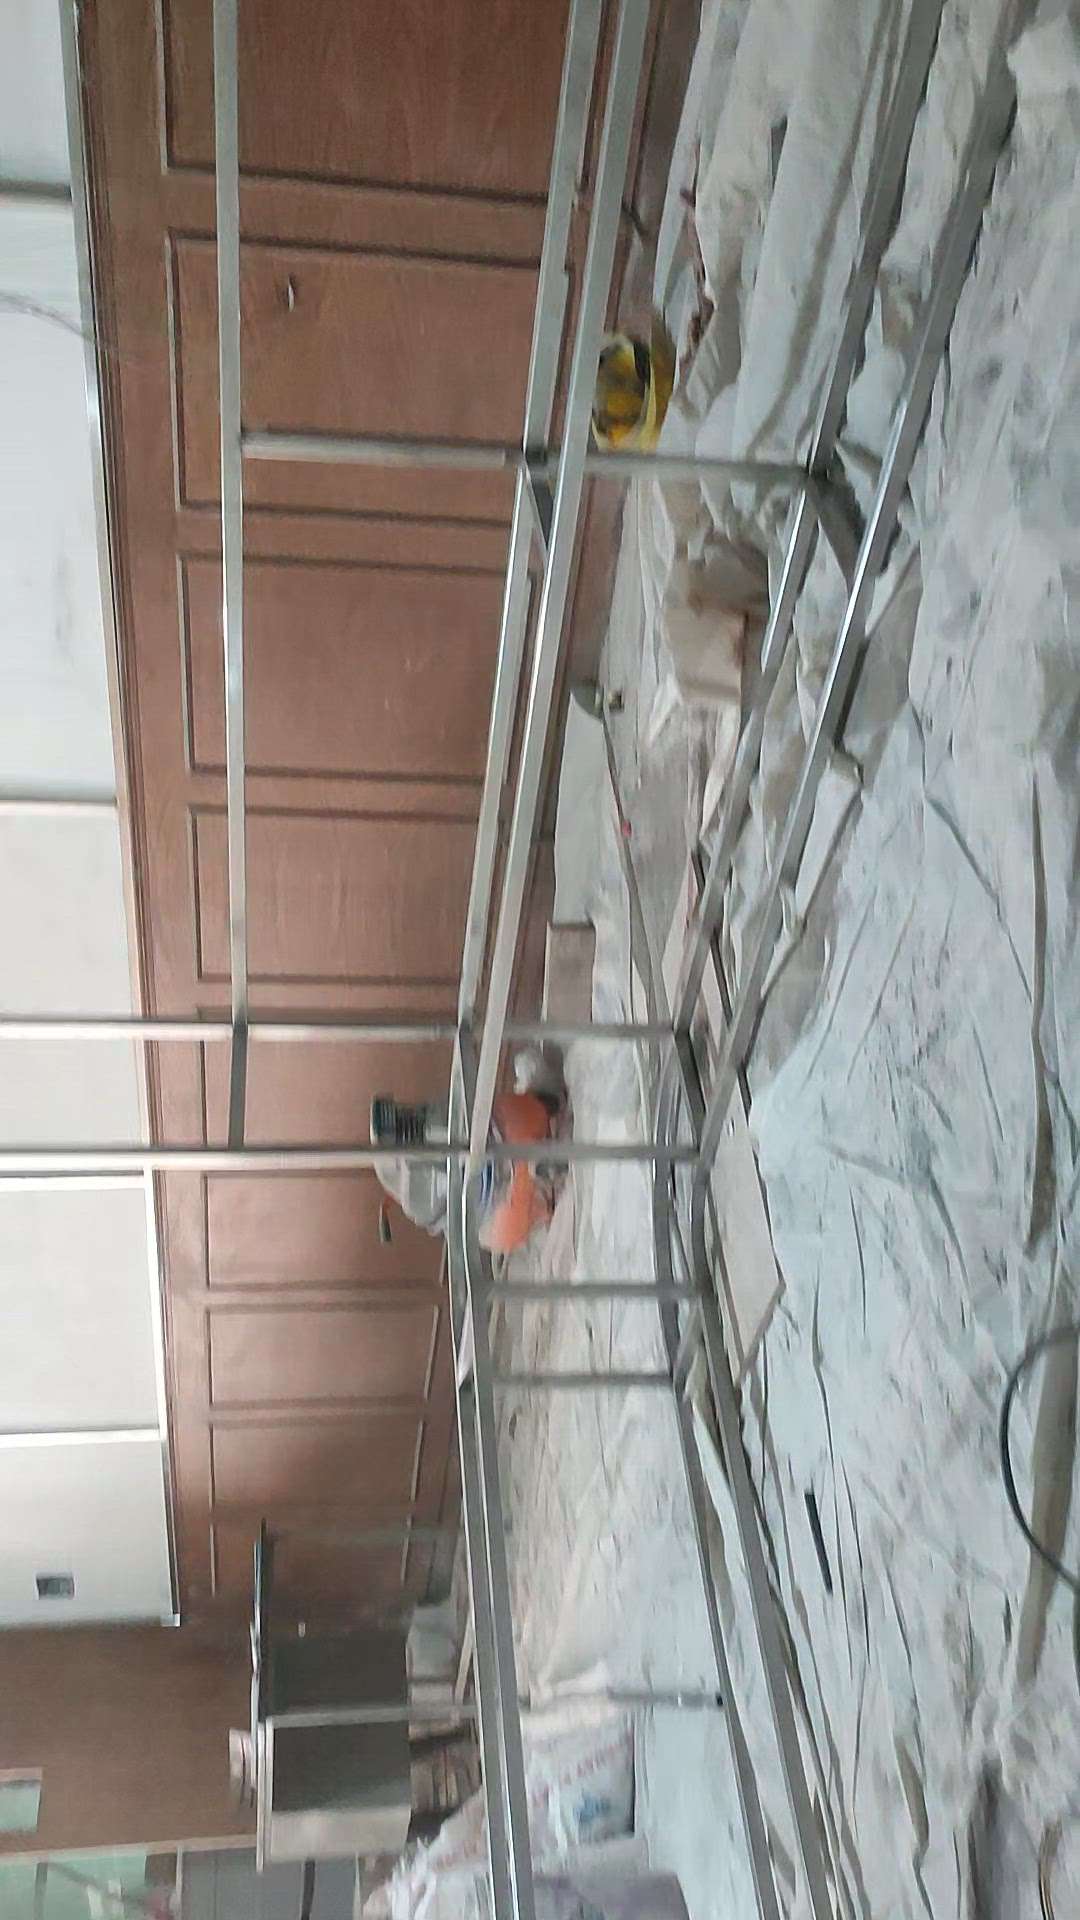 steel kitchen boxes.. Bismillah fabrication welding work 🙏 ..
#KitchenIdeas #srmarketing #koloapp #KitchenRenovation